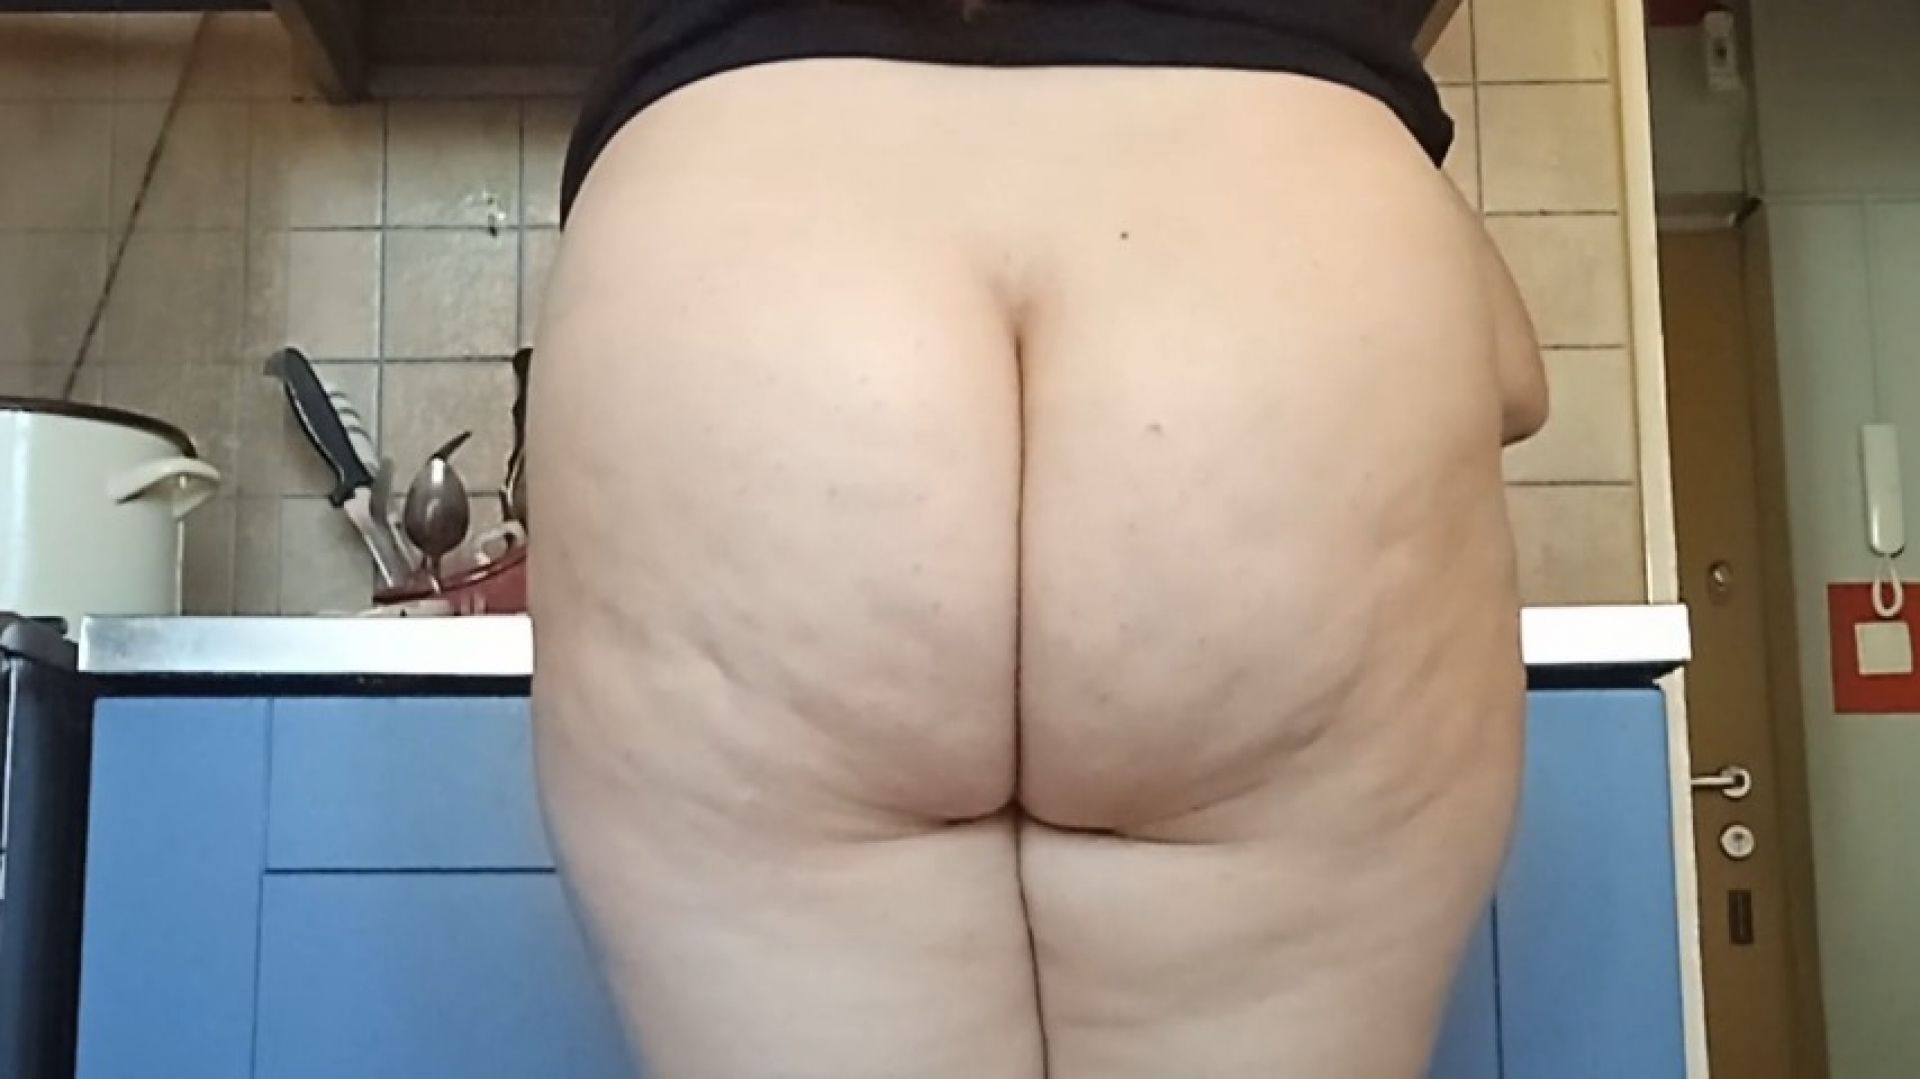 showing my ass